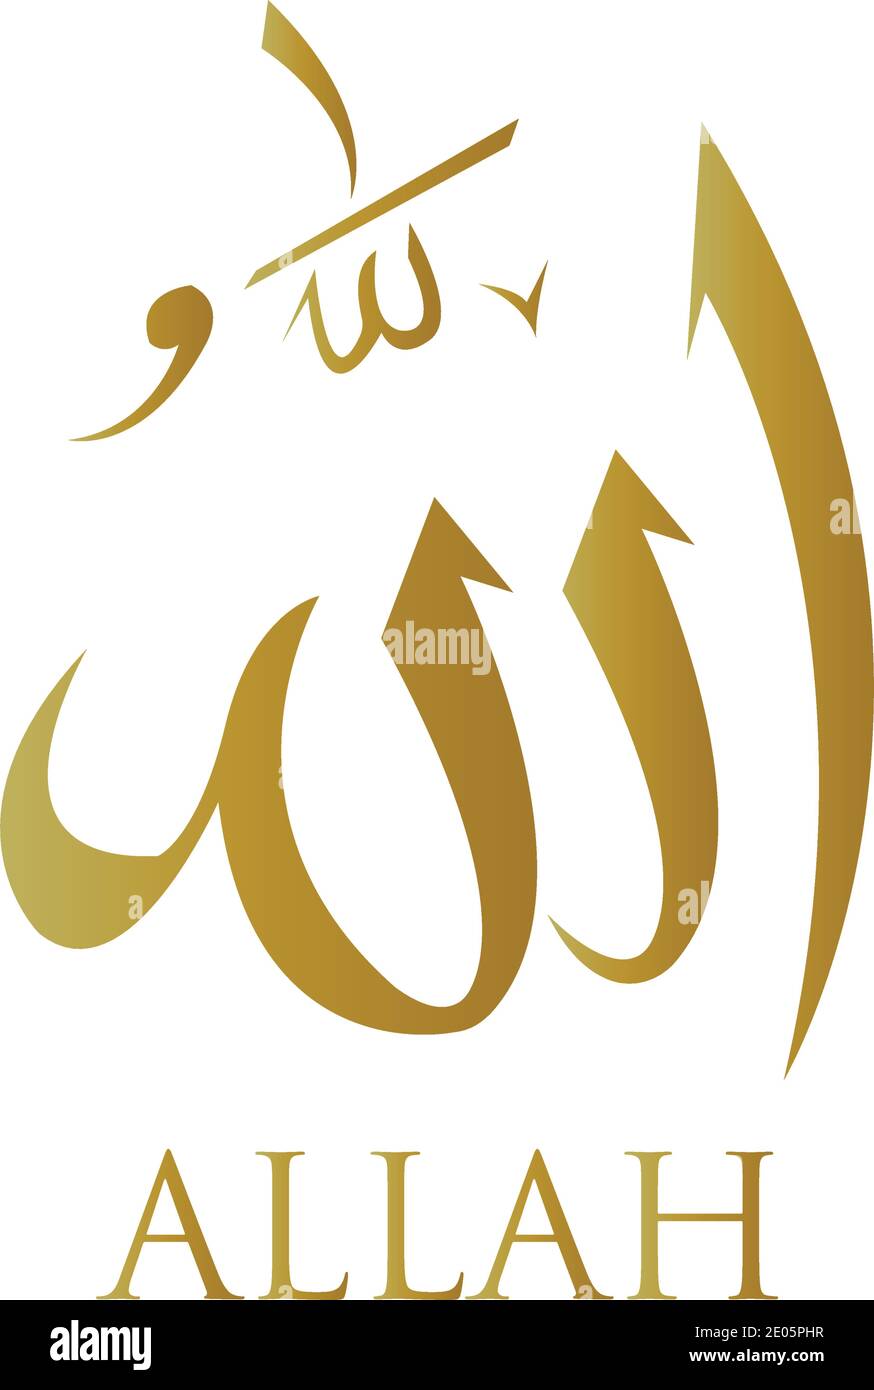 Allah name god moslem vector design Stock Vector Image & Art - Alamy